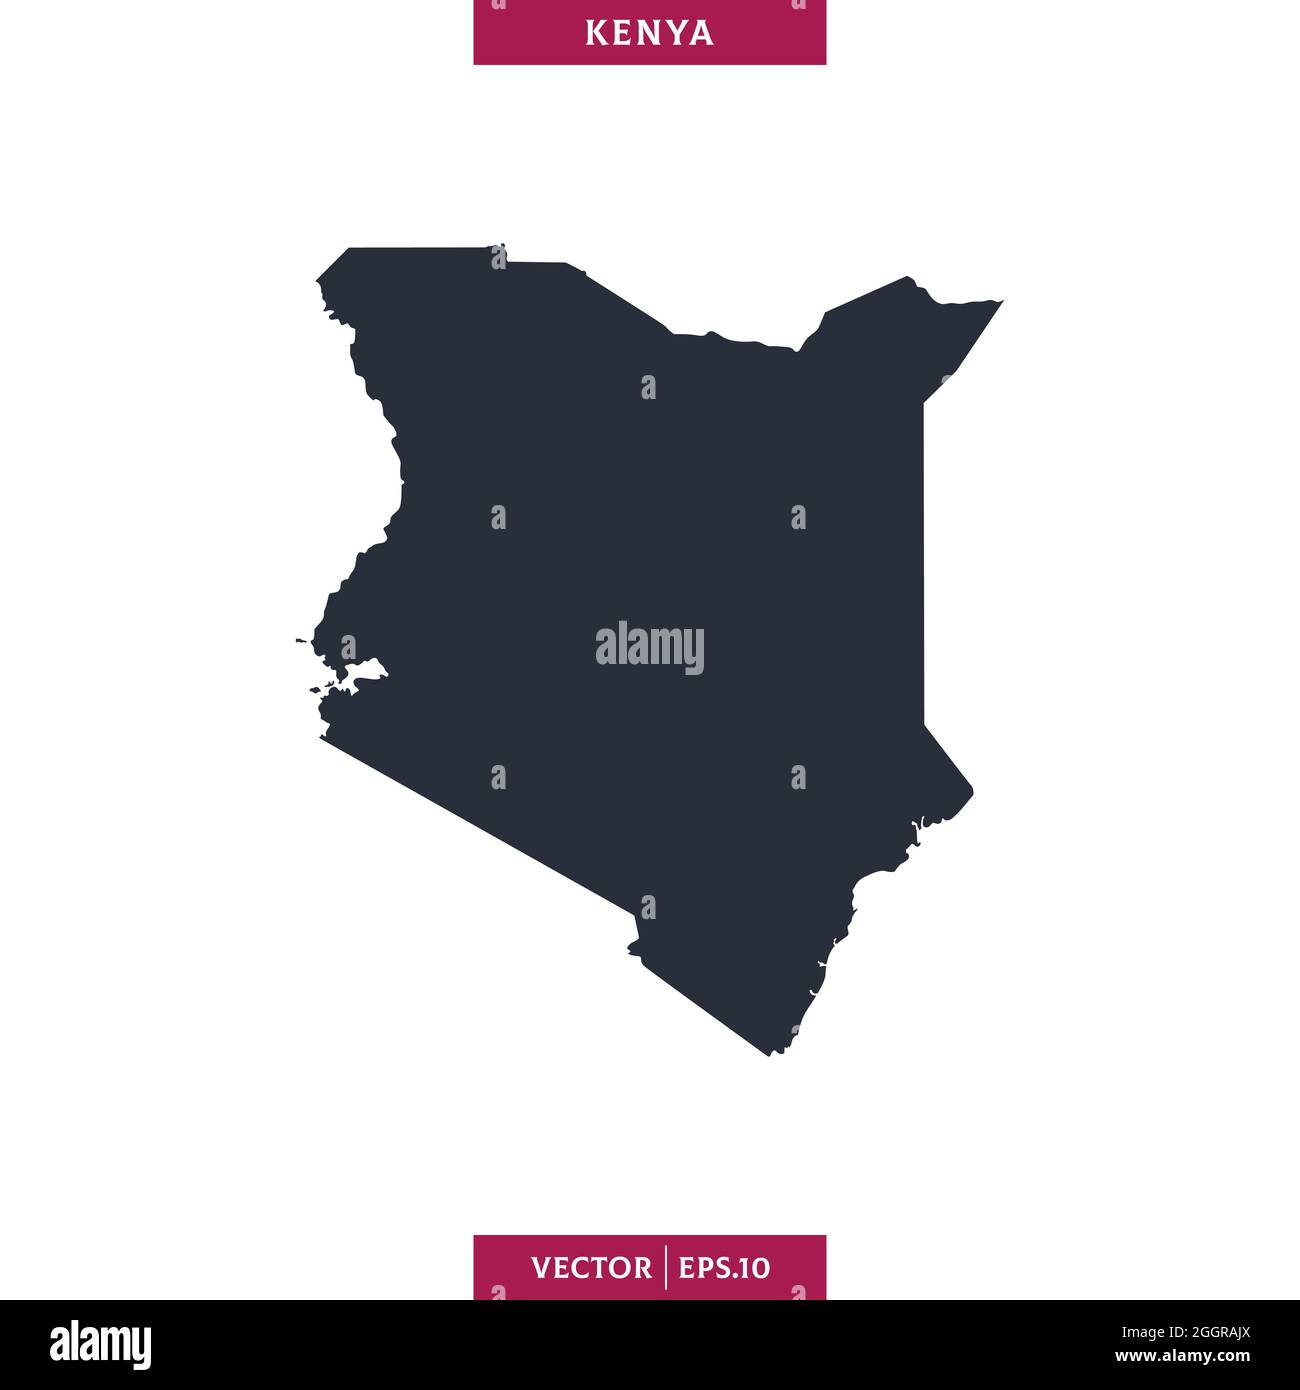 Detailed map of Kenya vector stock illustration design template. Vector eps 10. Stock Vector